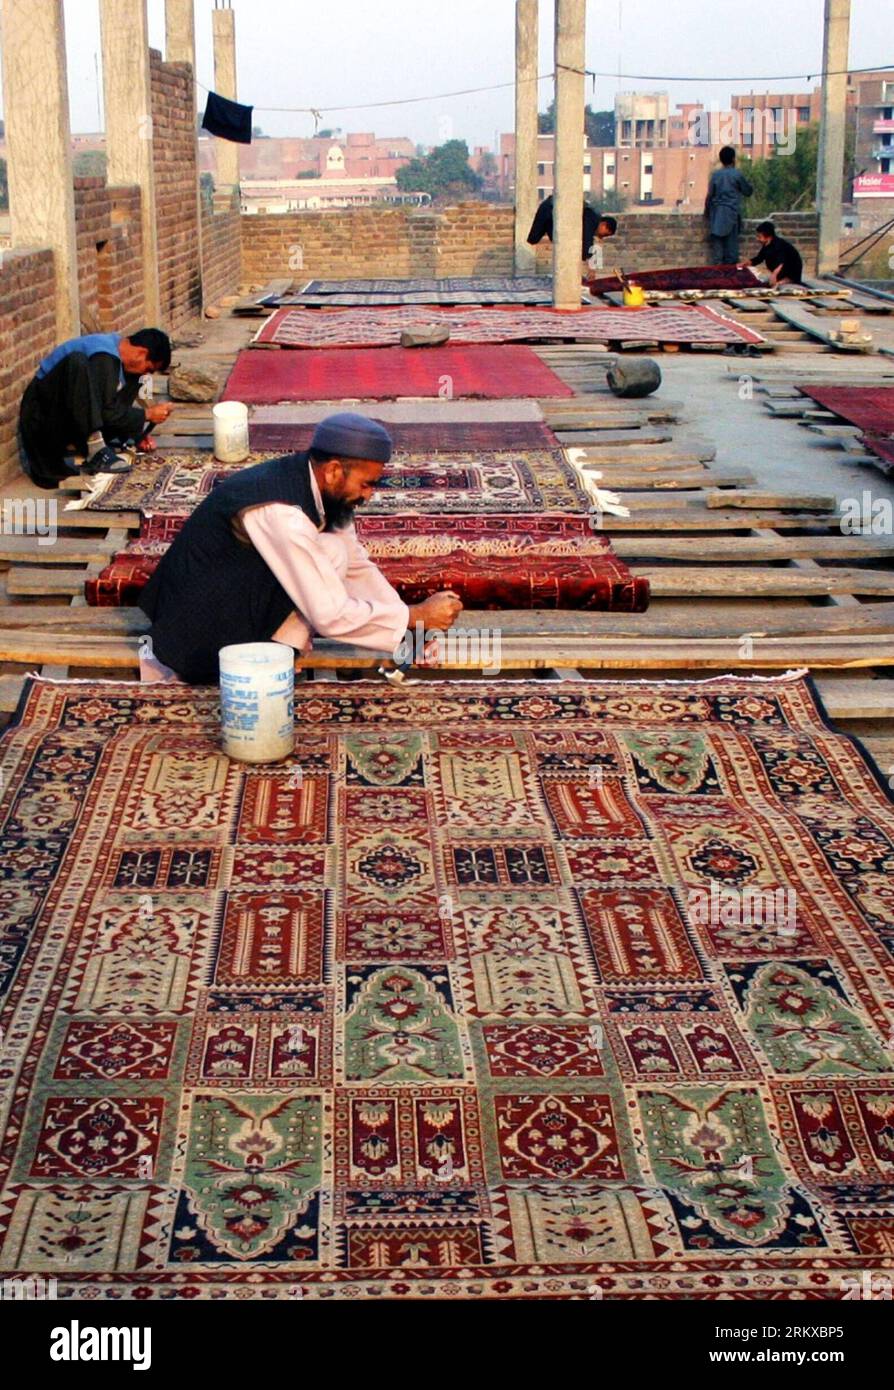 Bildnummer: 58936439  Datum: 20.12.2012  Copyright: imago/Xinhua (121220) -- PESHAWAR, Dec. 20, 2012 (Xinhua) -- Pakistani men craft hand-made carpets at a local carpet factory in northwest Pakistan s Peshawar, Dec. 20, 2012. According to reports, Pakistan s carpet exports have witnessed a huge decline of more than 50 percent during the last five years. (Xinhua/Ahmad Sidique) (zf) PAKISTAN-PESHAWAR-CARPET EXPORTS-DECREASE PUBLICATIONxNOTxINxCHN Wirtschaft Arbeit Teppich Fabrik Teppichfabrik x0x xdd 2012 hoch      58936439 Date 20 12 2012 Copyright Imago XINHUA  Peshawar DEC 20 2012 XINHUA Paki Stock Photo